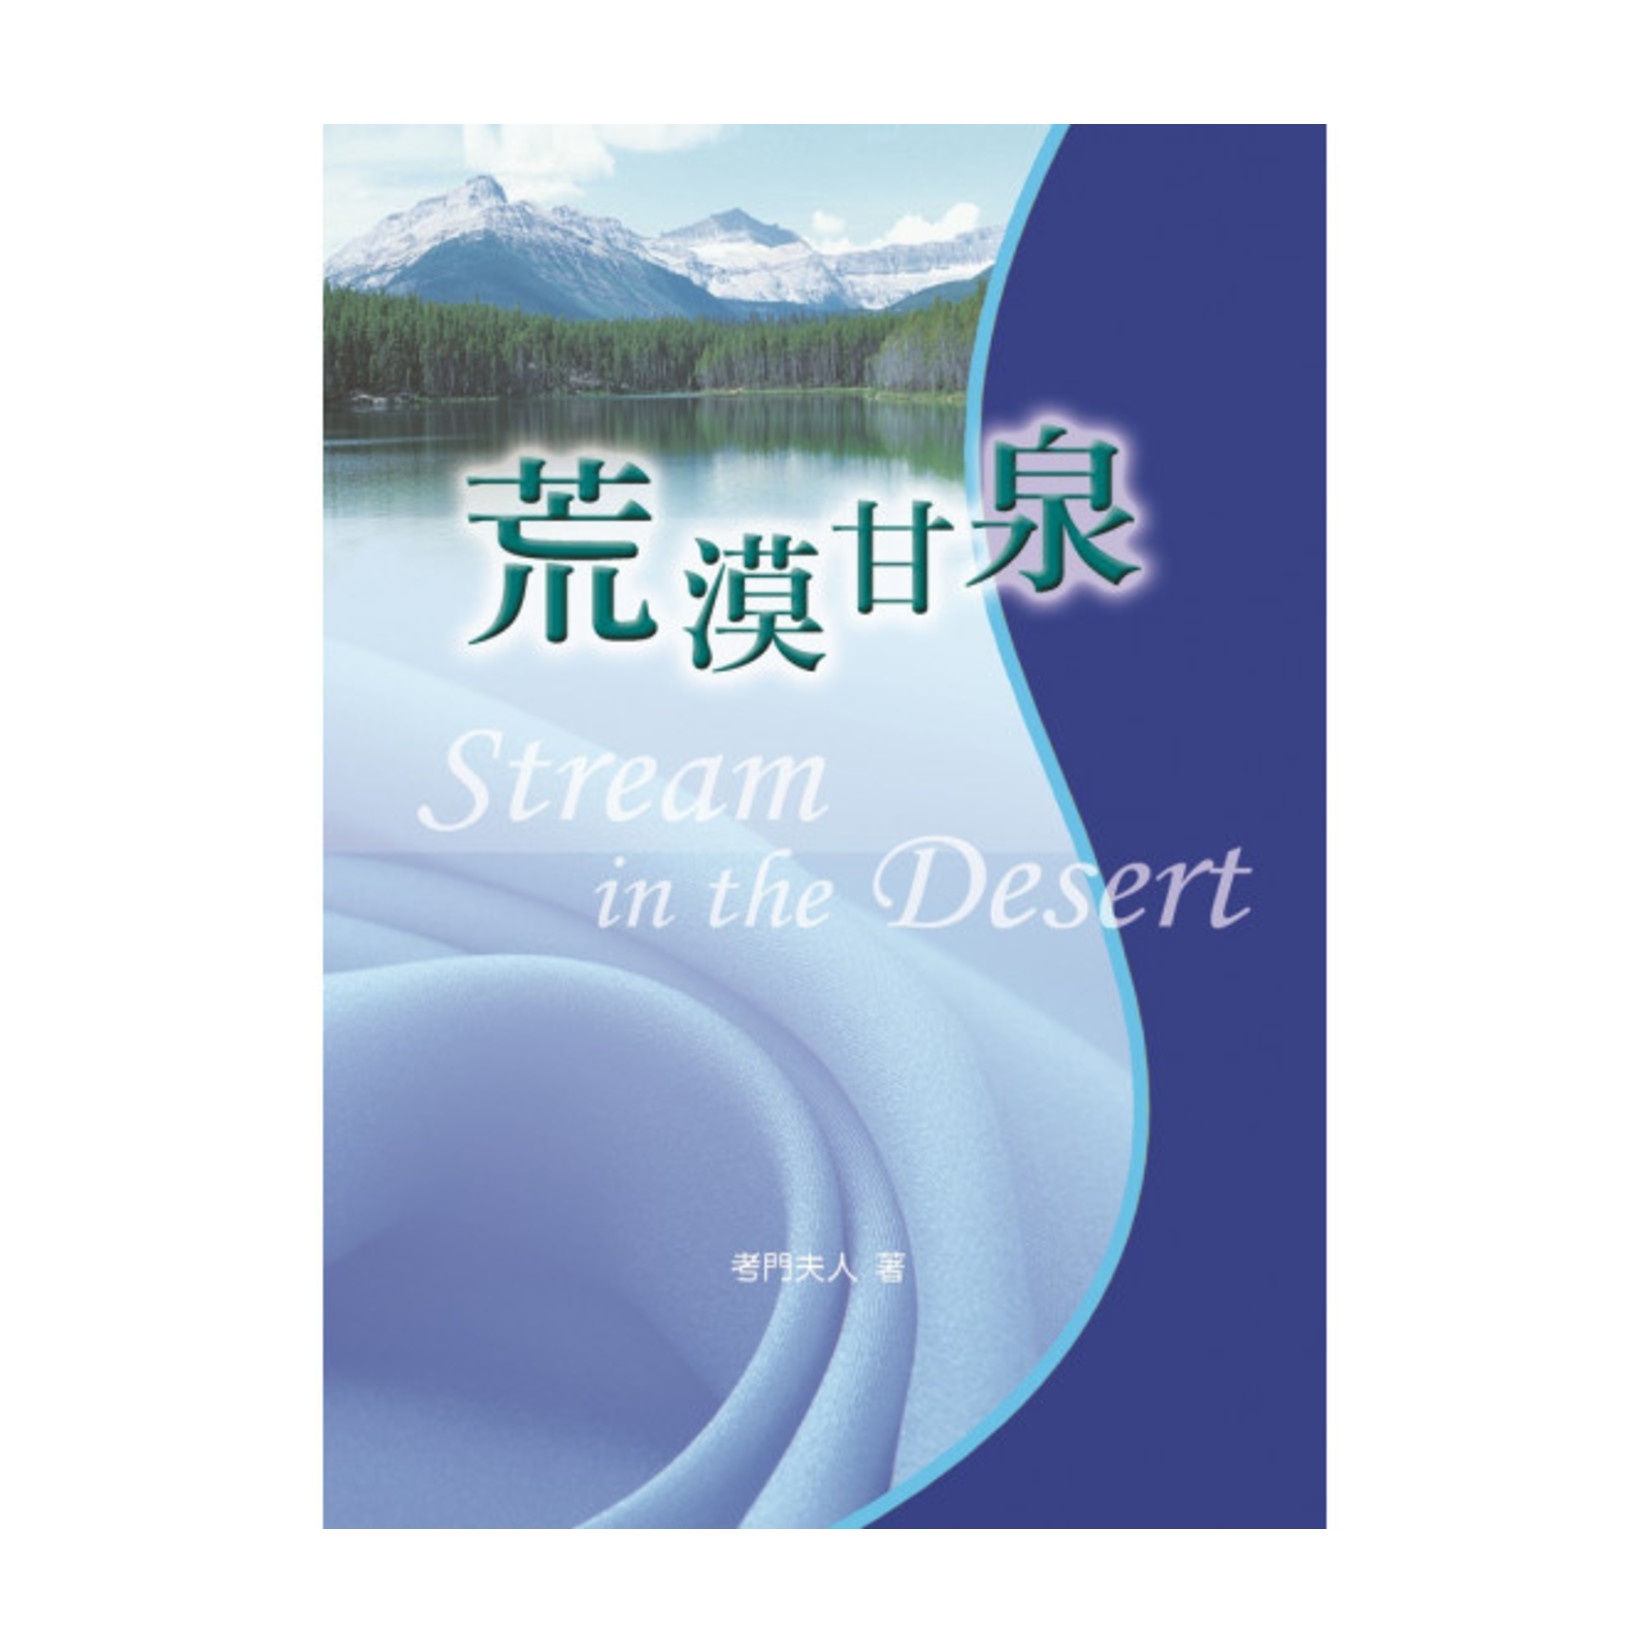 中國主日學協會 China Sunday School Association 荒漠甘泉（小本精裝）Streams in the Desert